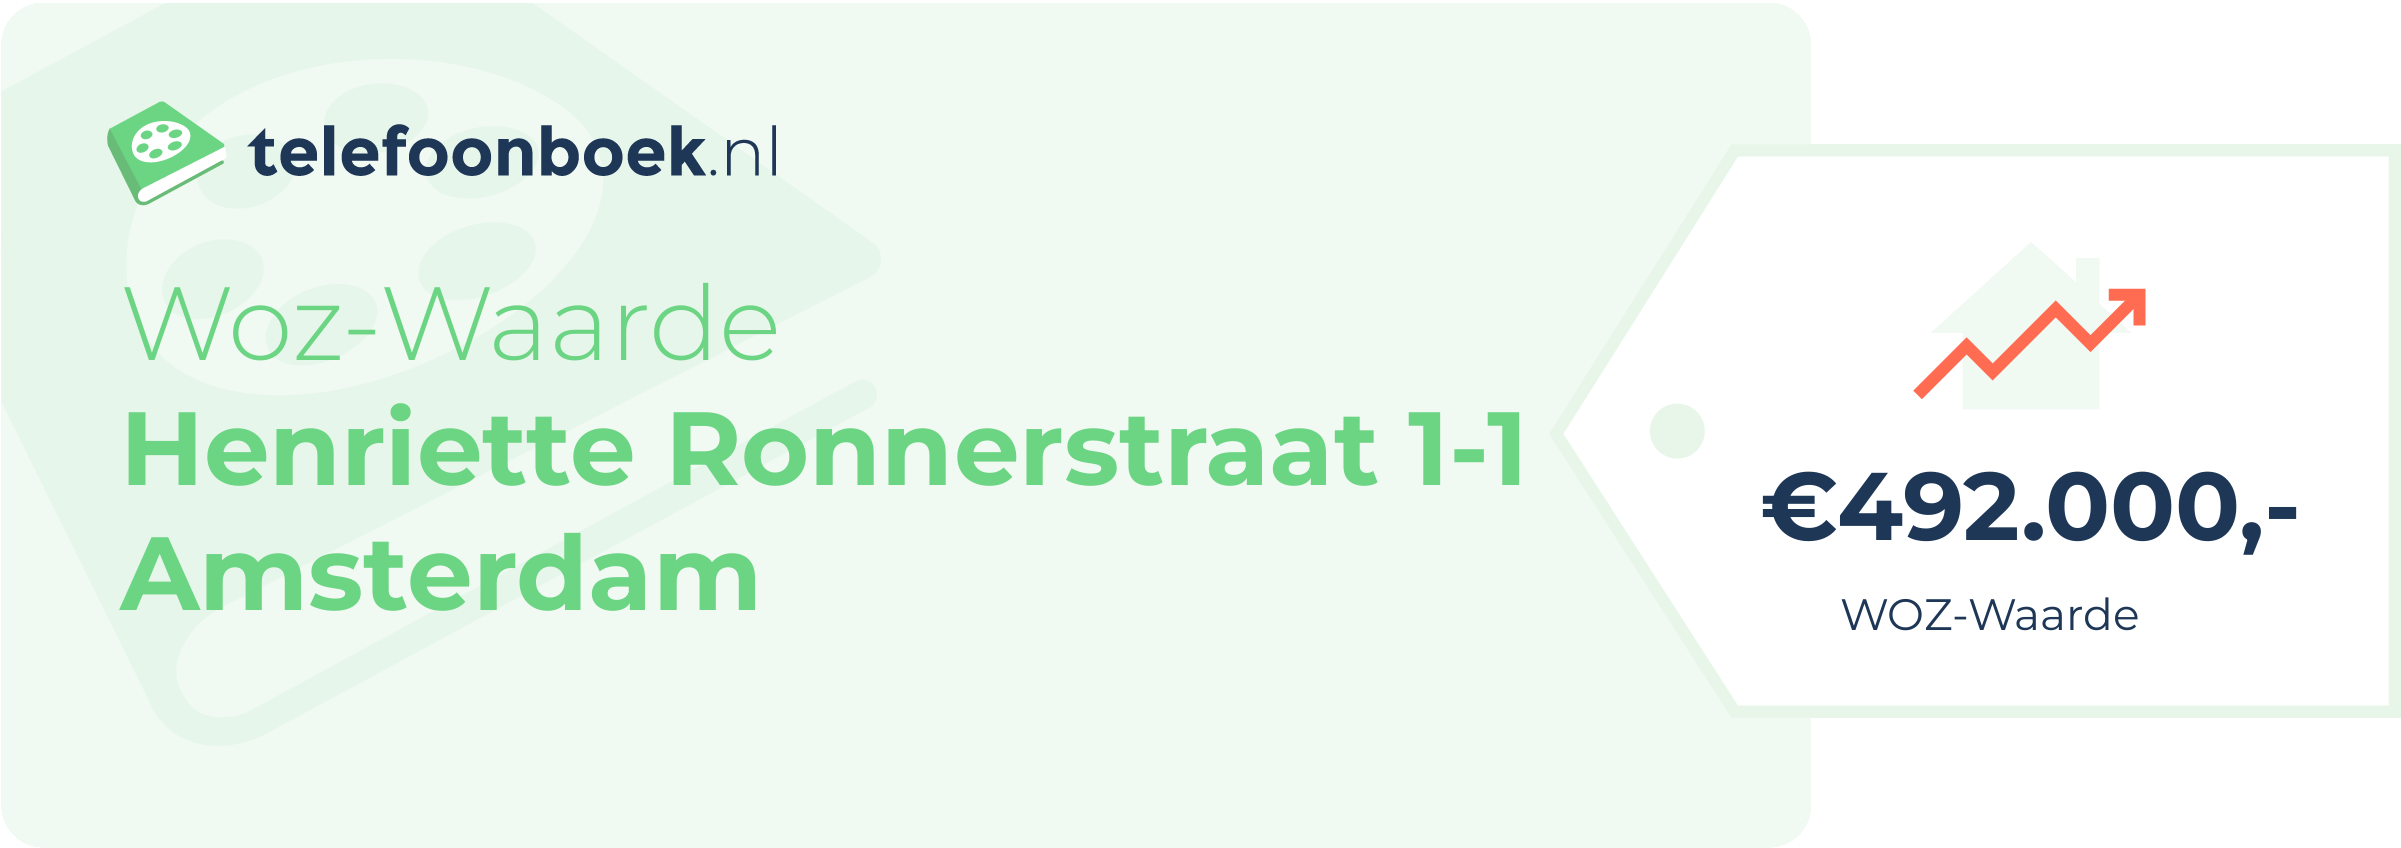 WOZ-waarde Henriette Ronnerstraat 1-1 Amsterdam